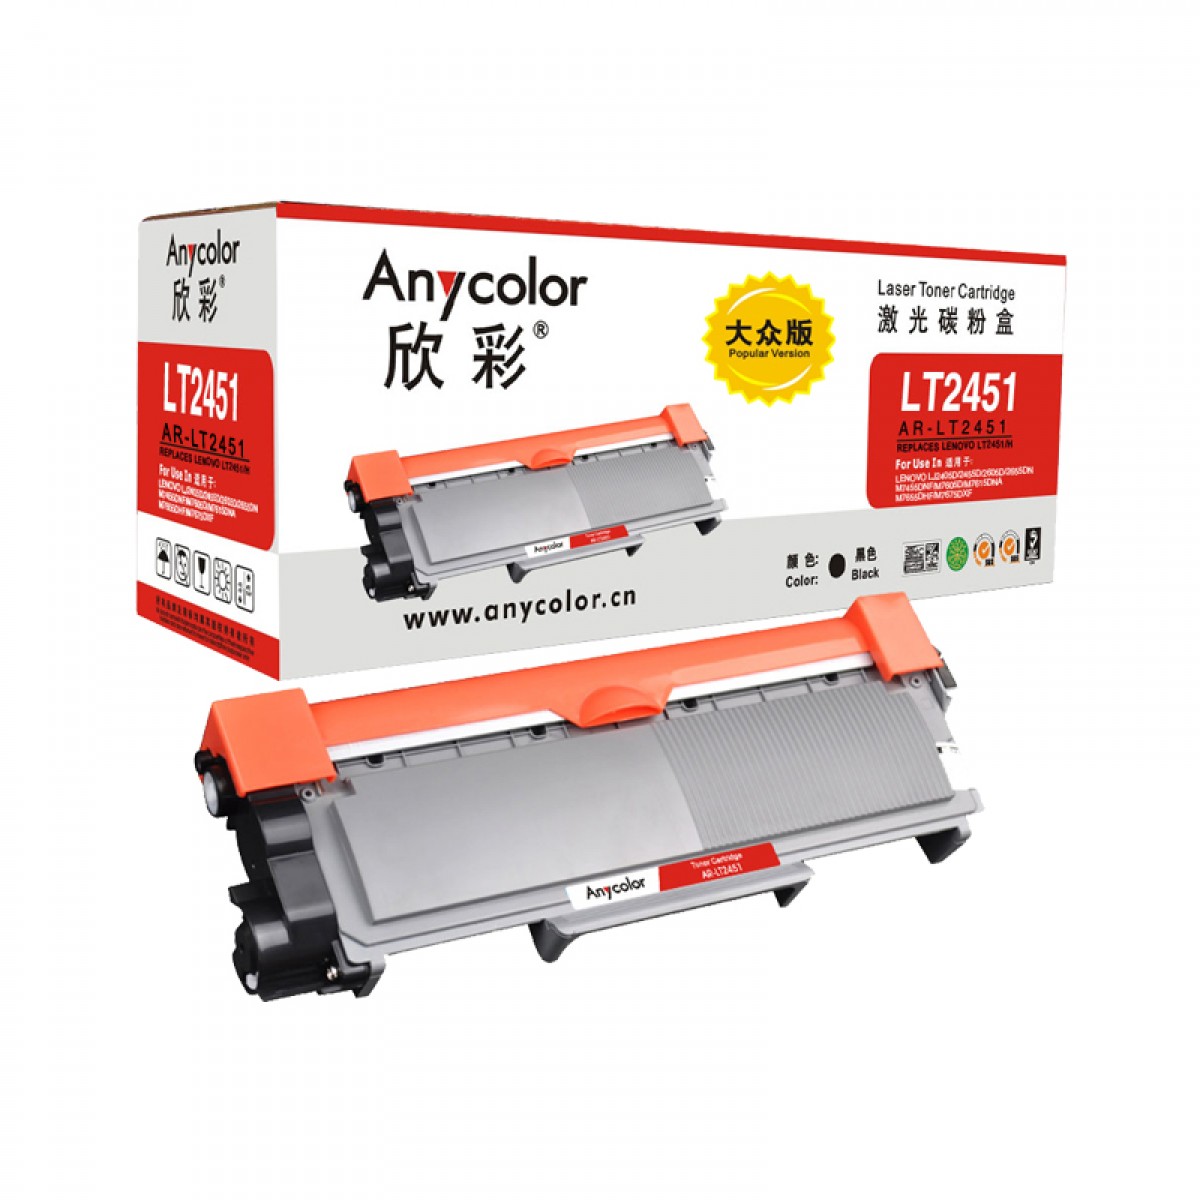 欣彩（Anycolor）LT2451粉盒 大众版 AR-LT2451黑色墨粉盒 适用联想LJ2405D LJ2455D LJ2605D LJ2655DN